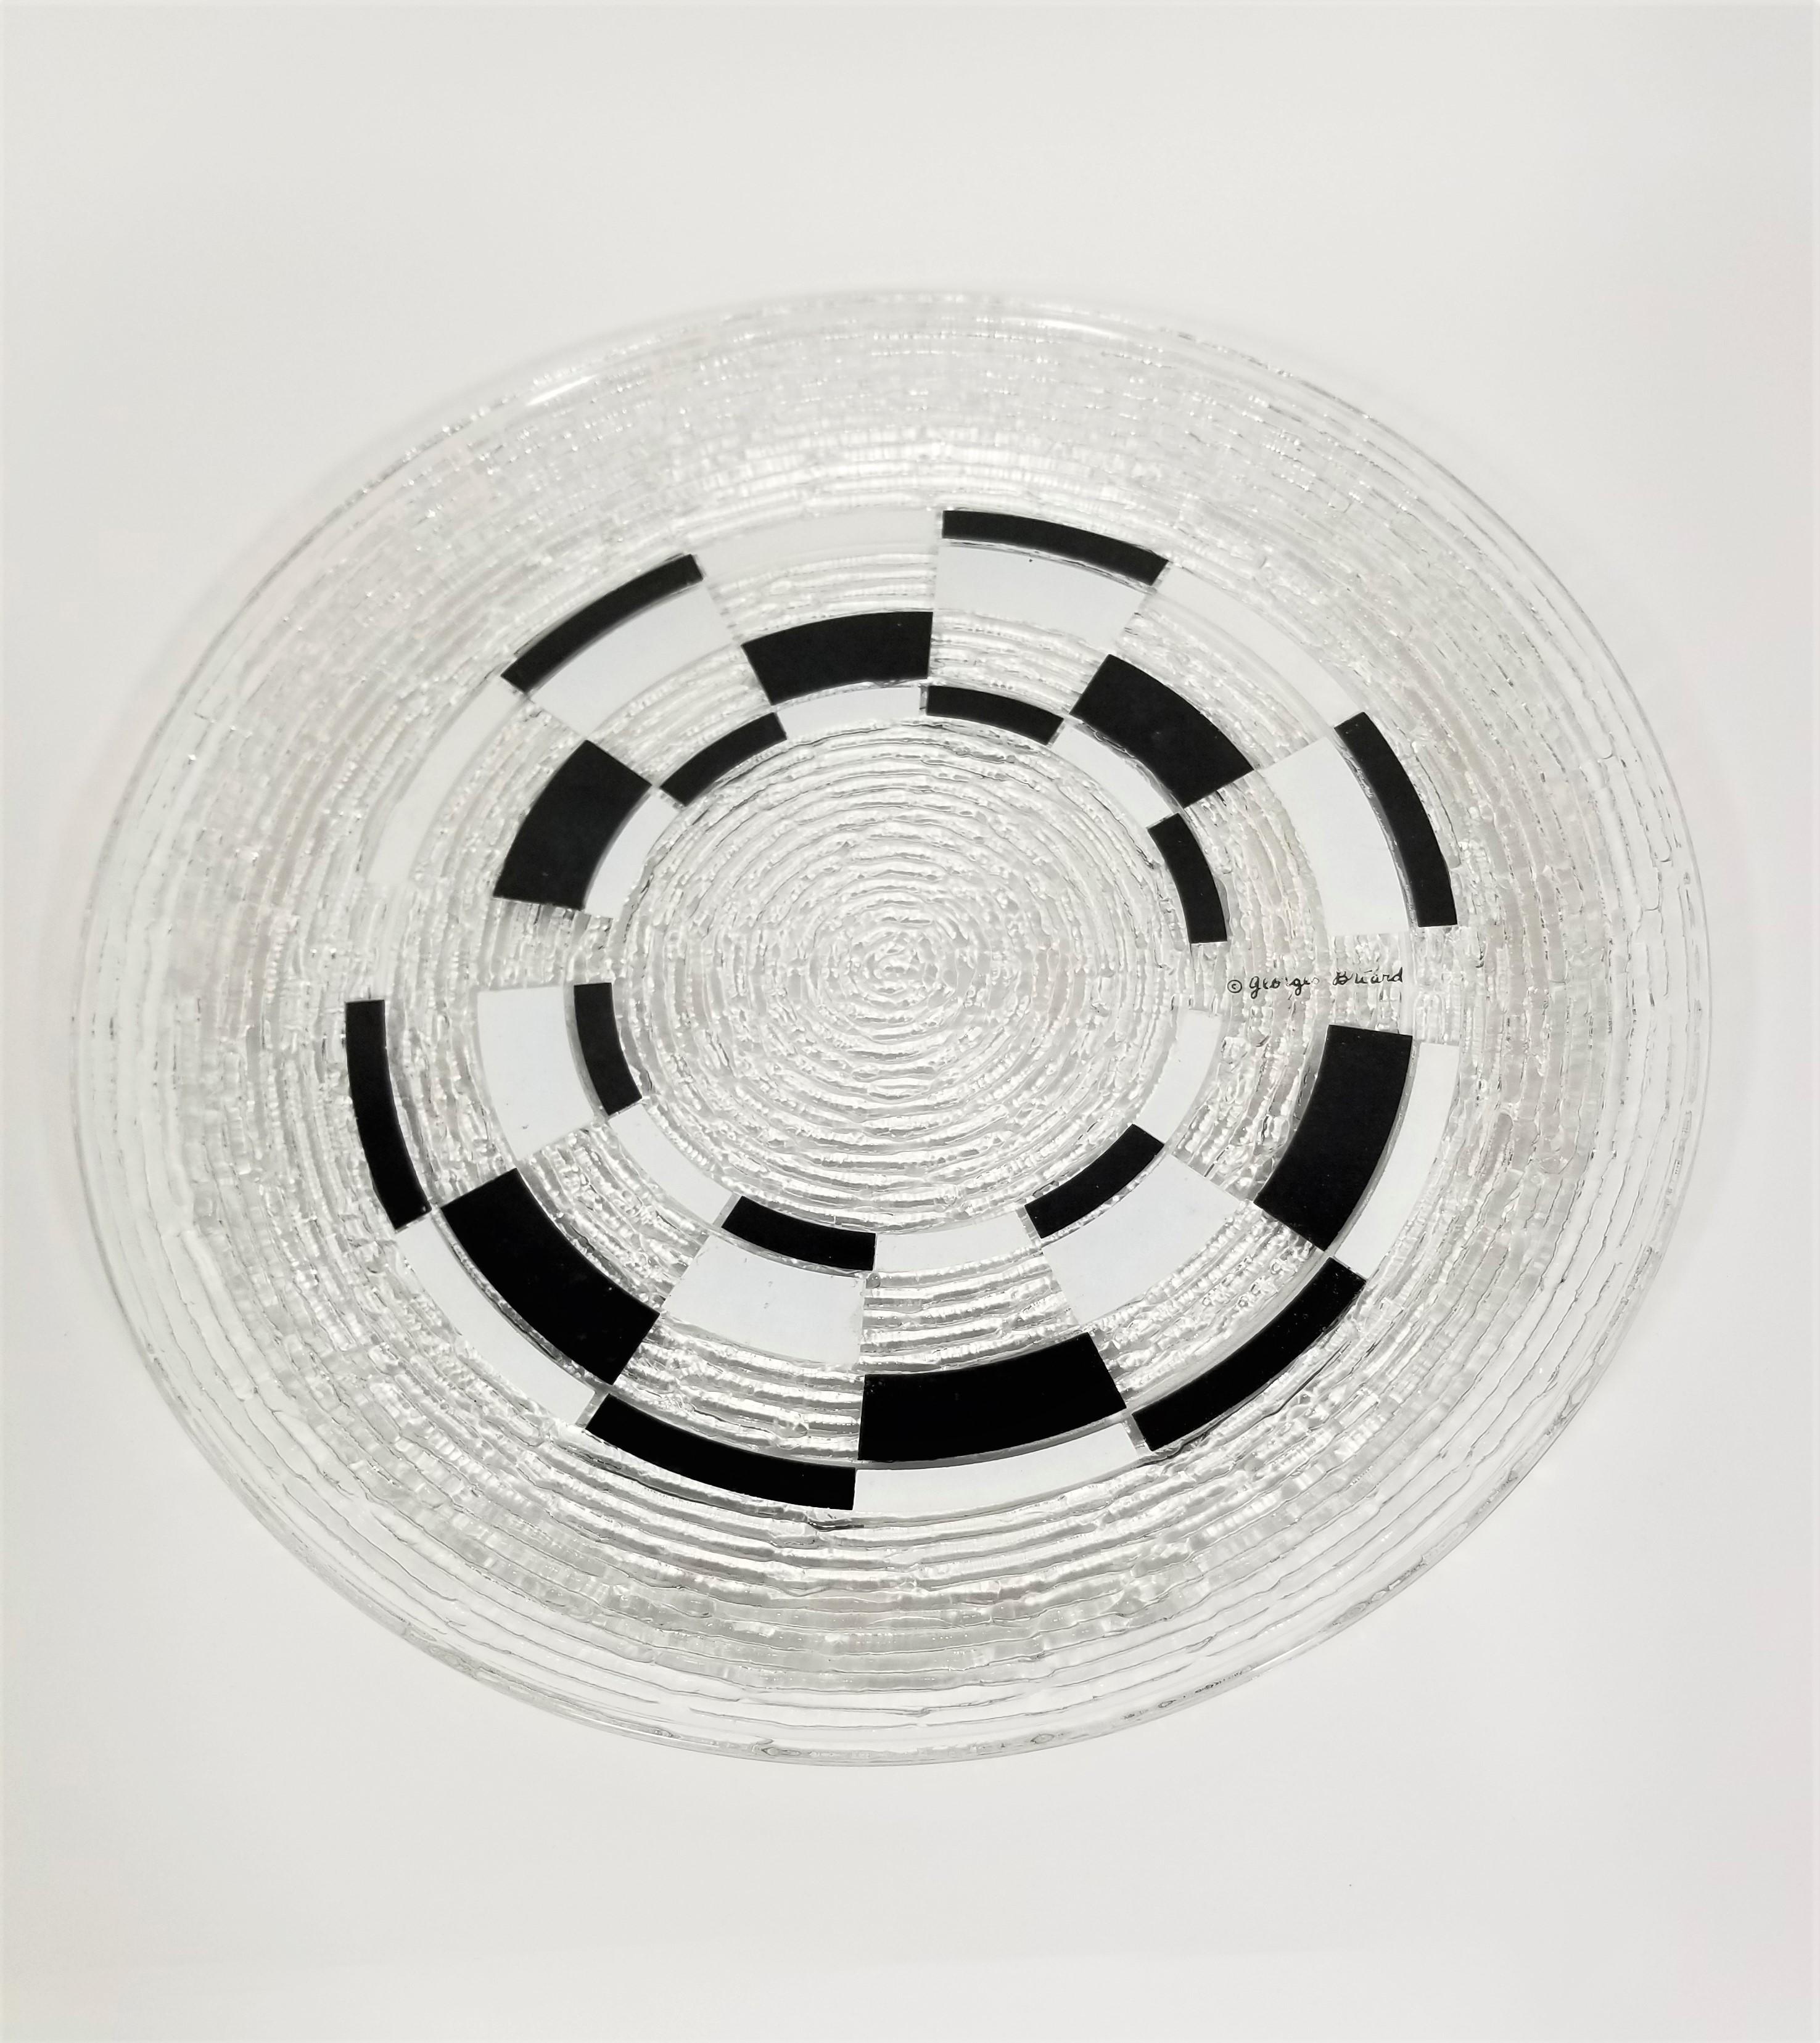 1960s Mid-Century Modern Georges Briard signed serving platter. Black and white mod design.
Brutalist Modernist design in glass.